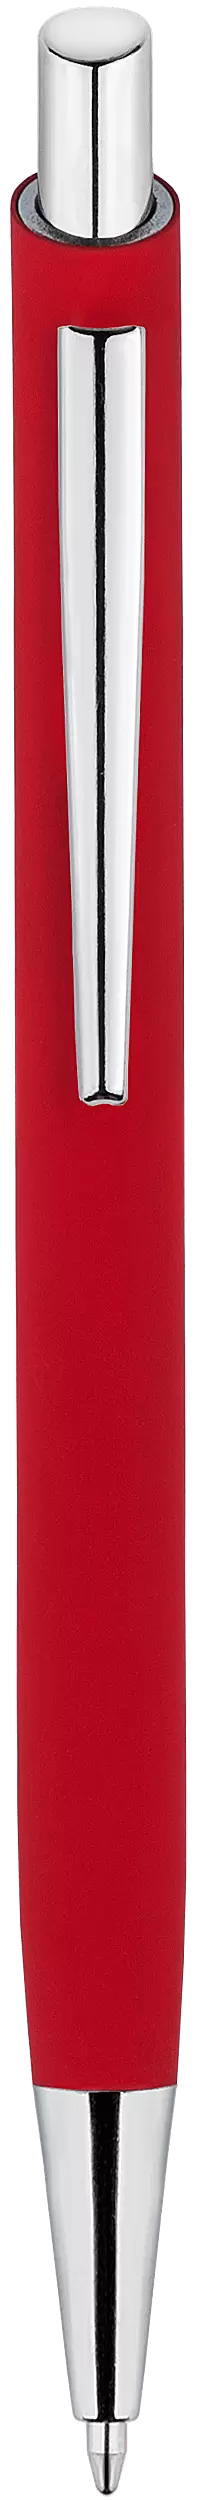 Ручка ELFARO SOFT Красная 3053-03